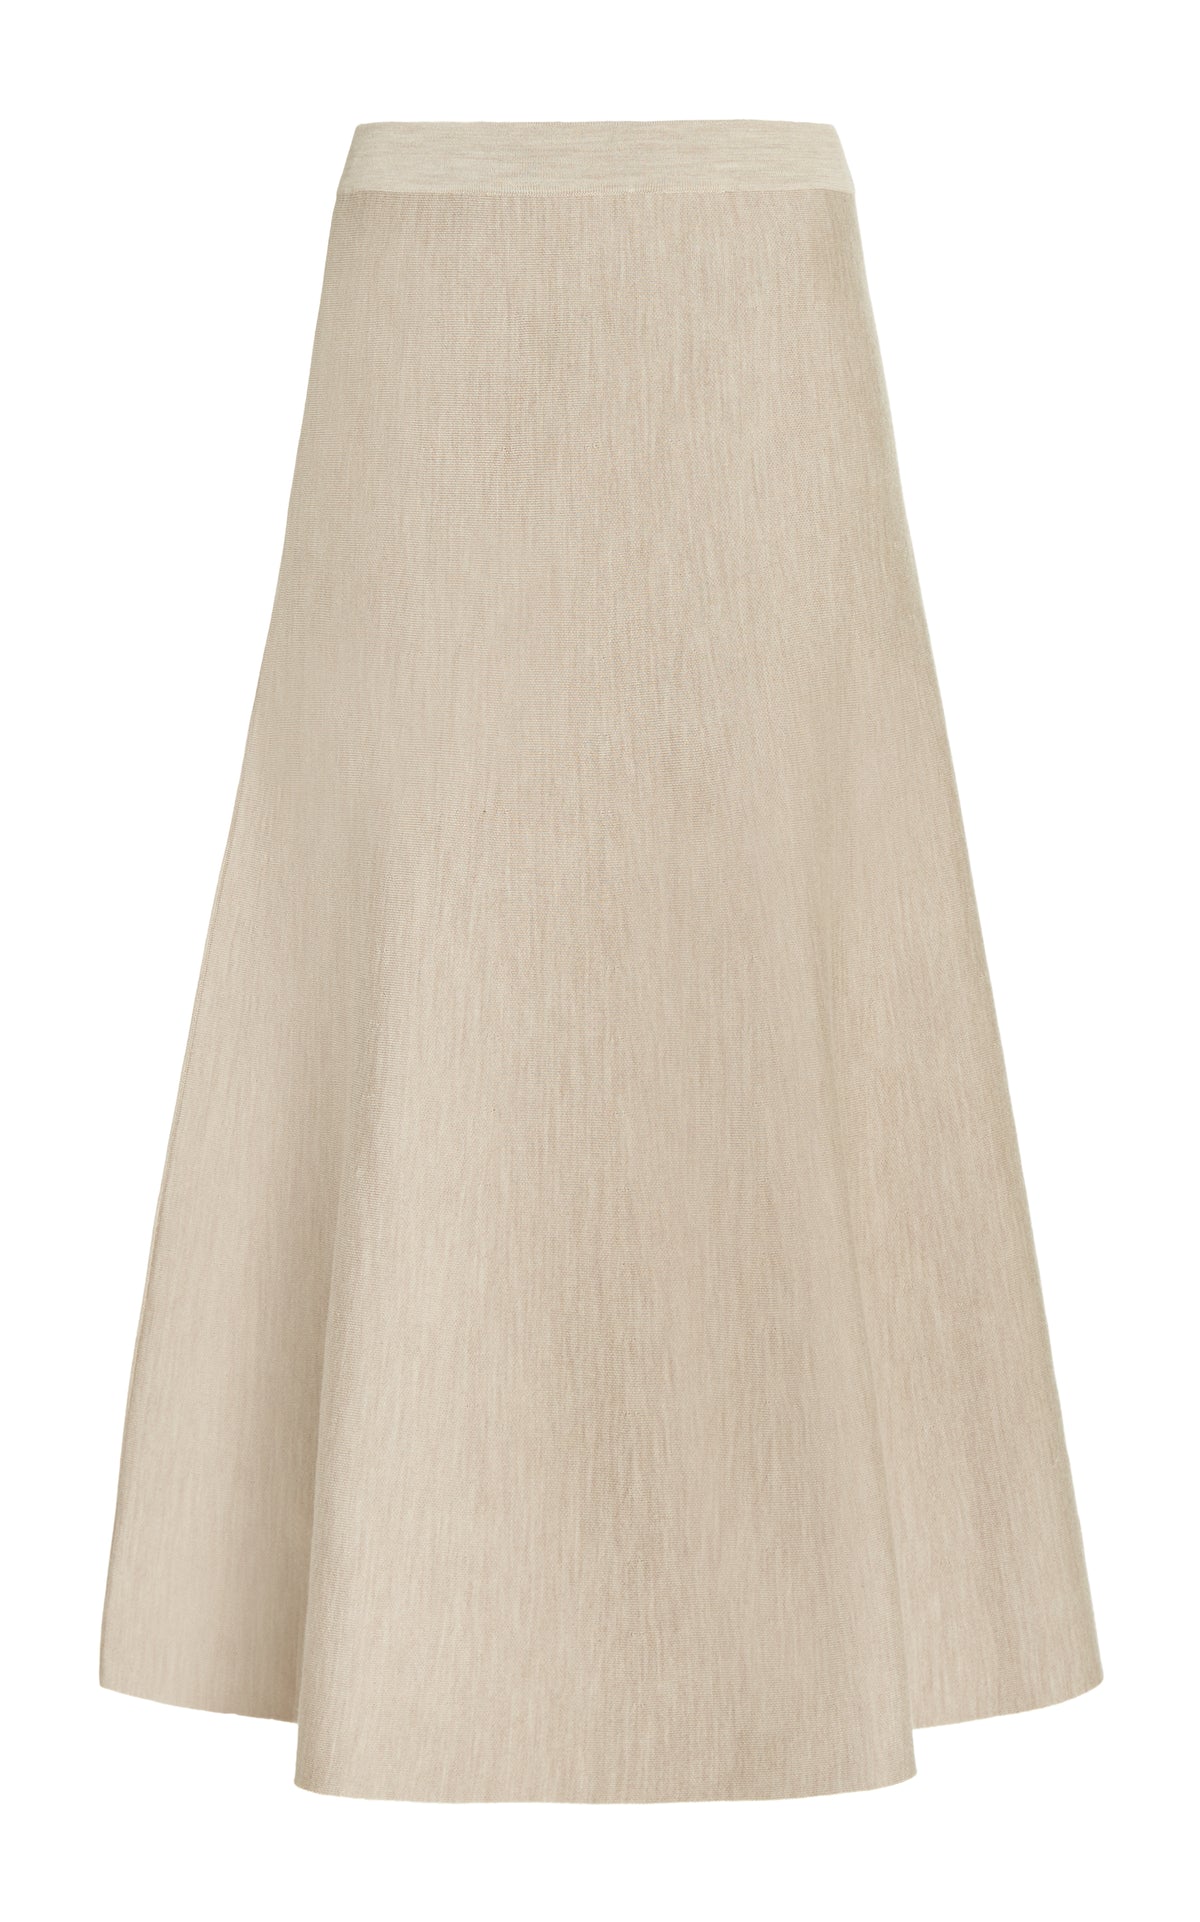 Freddie Skirt in Oatmeal Cashmere Wool